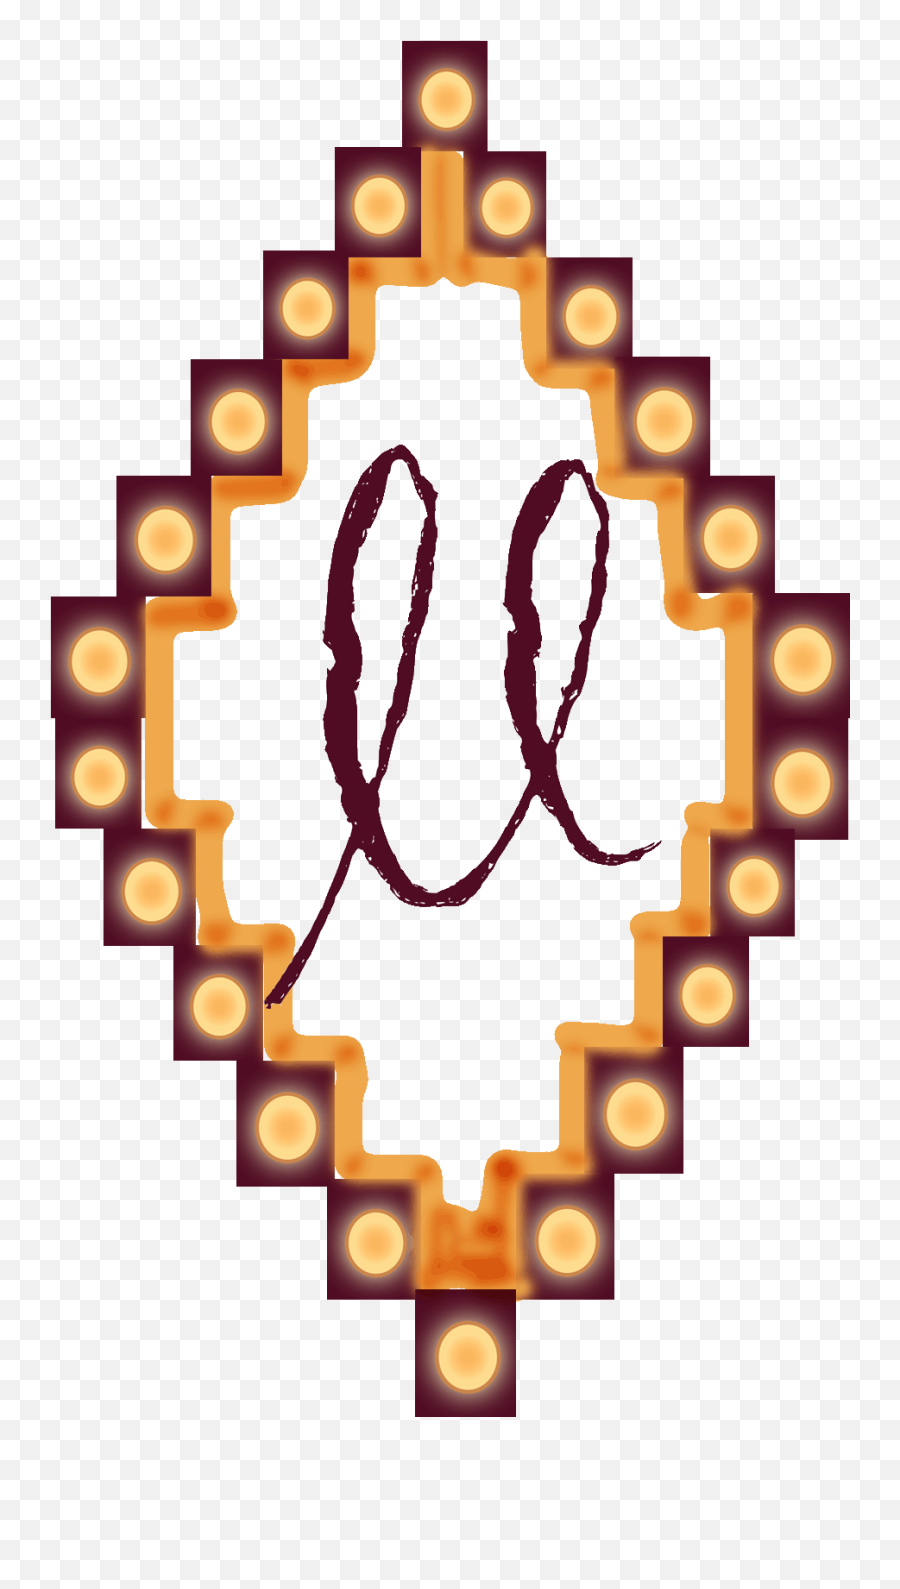 Native American Symbolism - The Diamond Louise Little Art Emoji,Black Diamond Emoticon